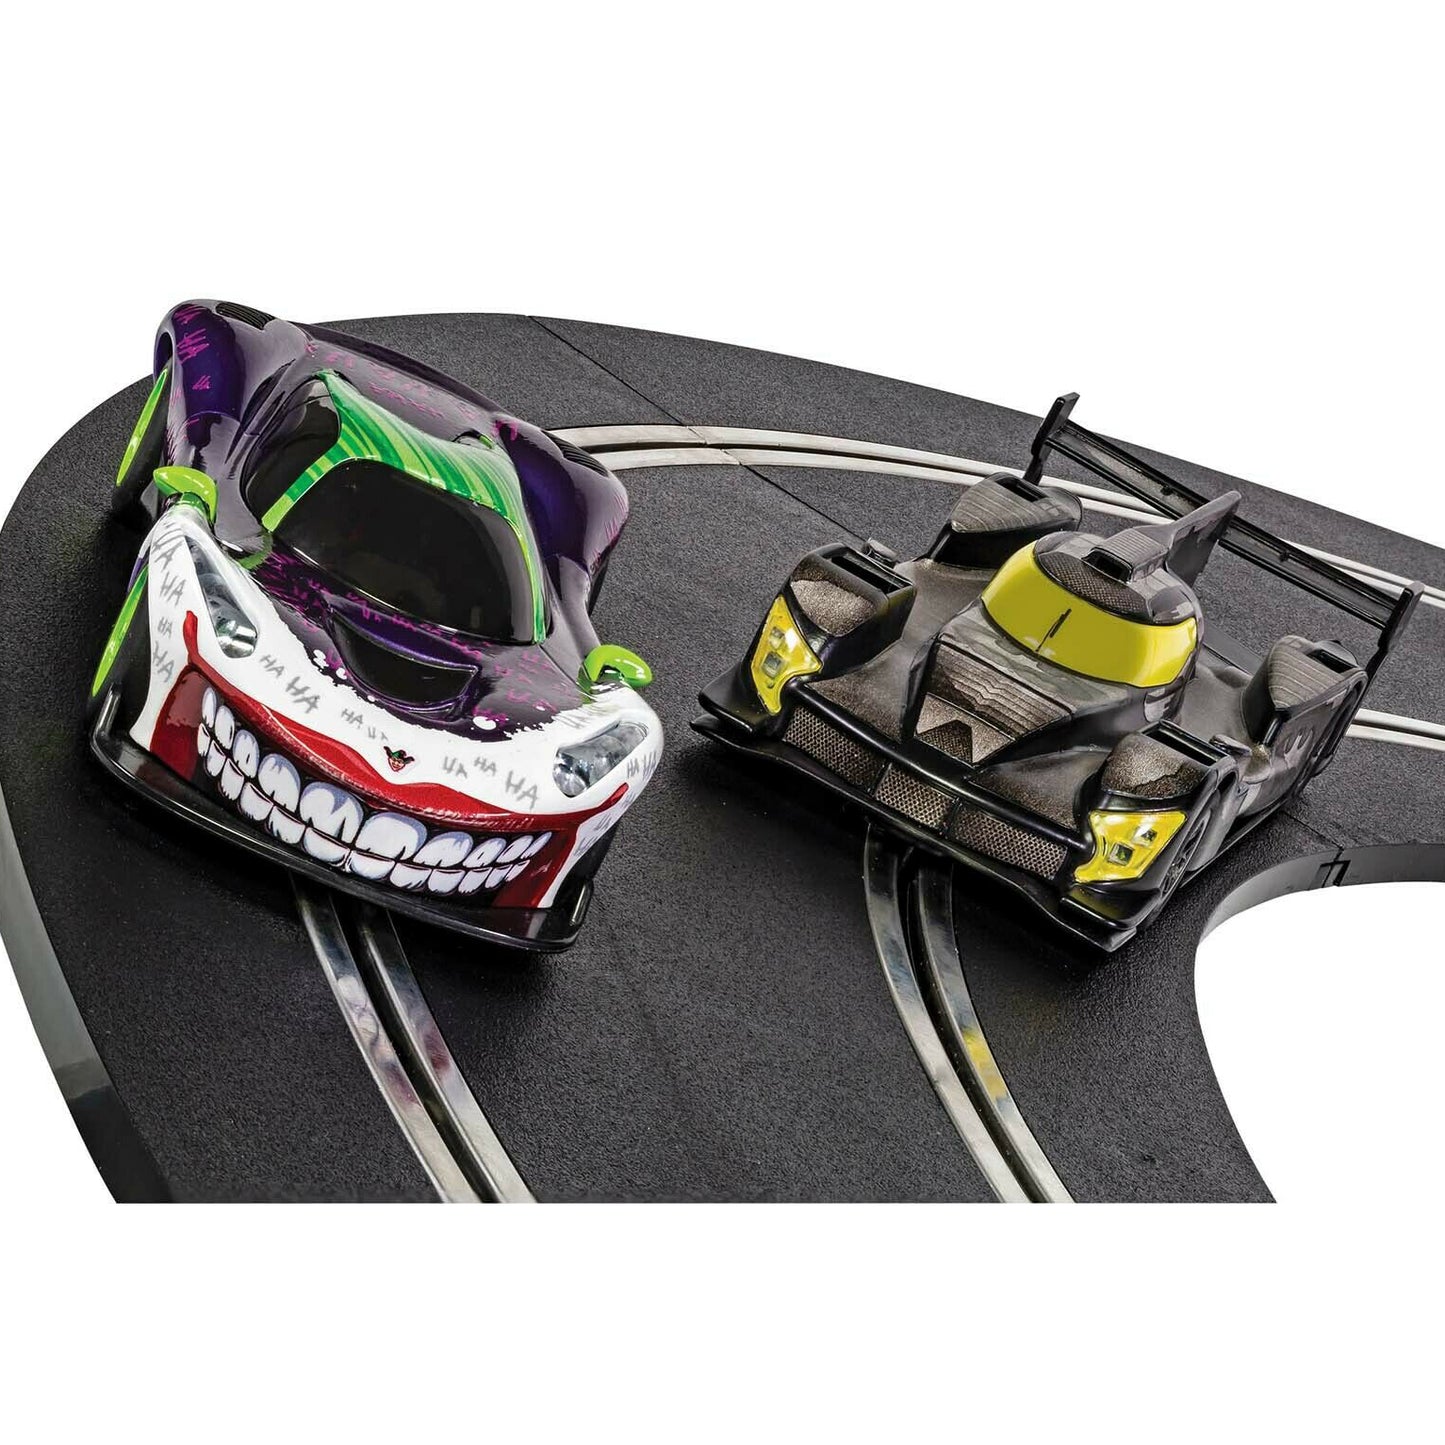 Scalextric Sport 1:32 Set - Figure-Of-Eight Layout + Batman & Joker Cars